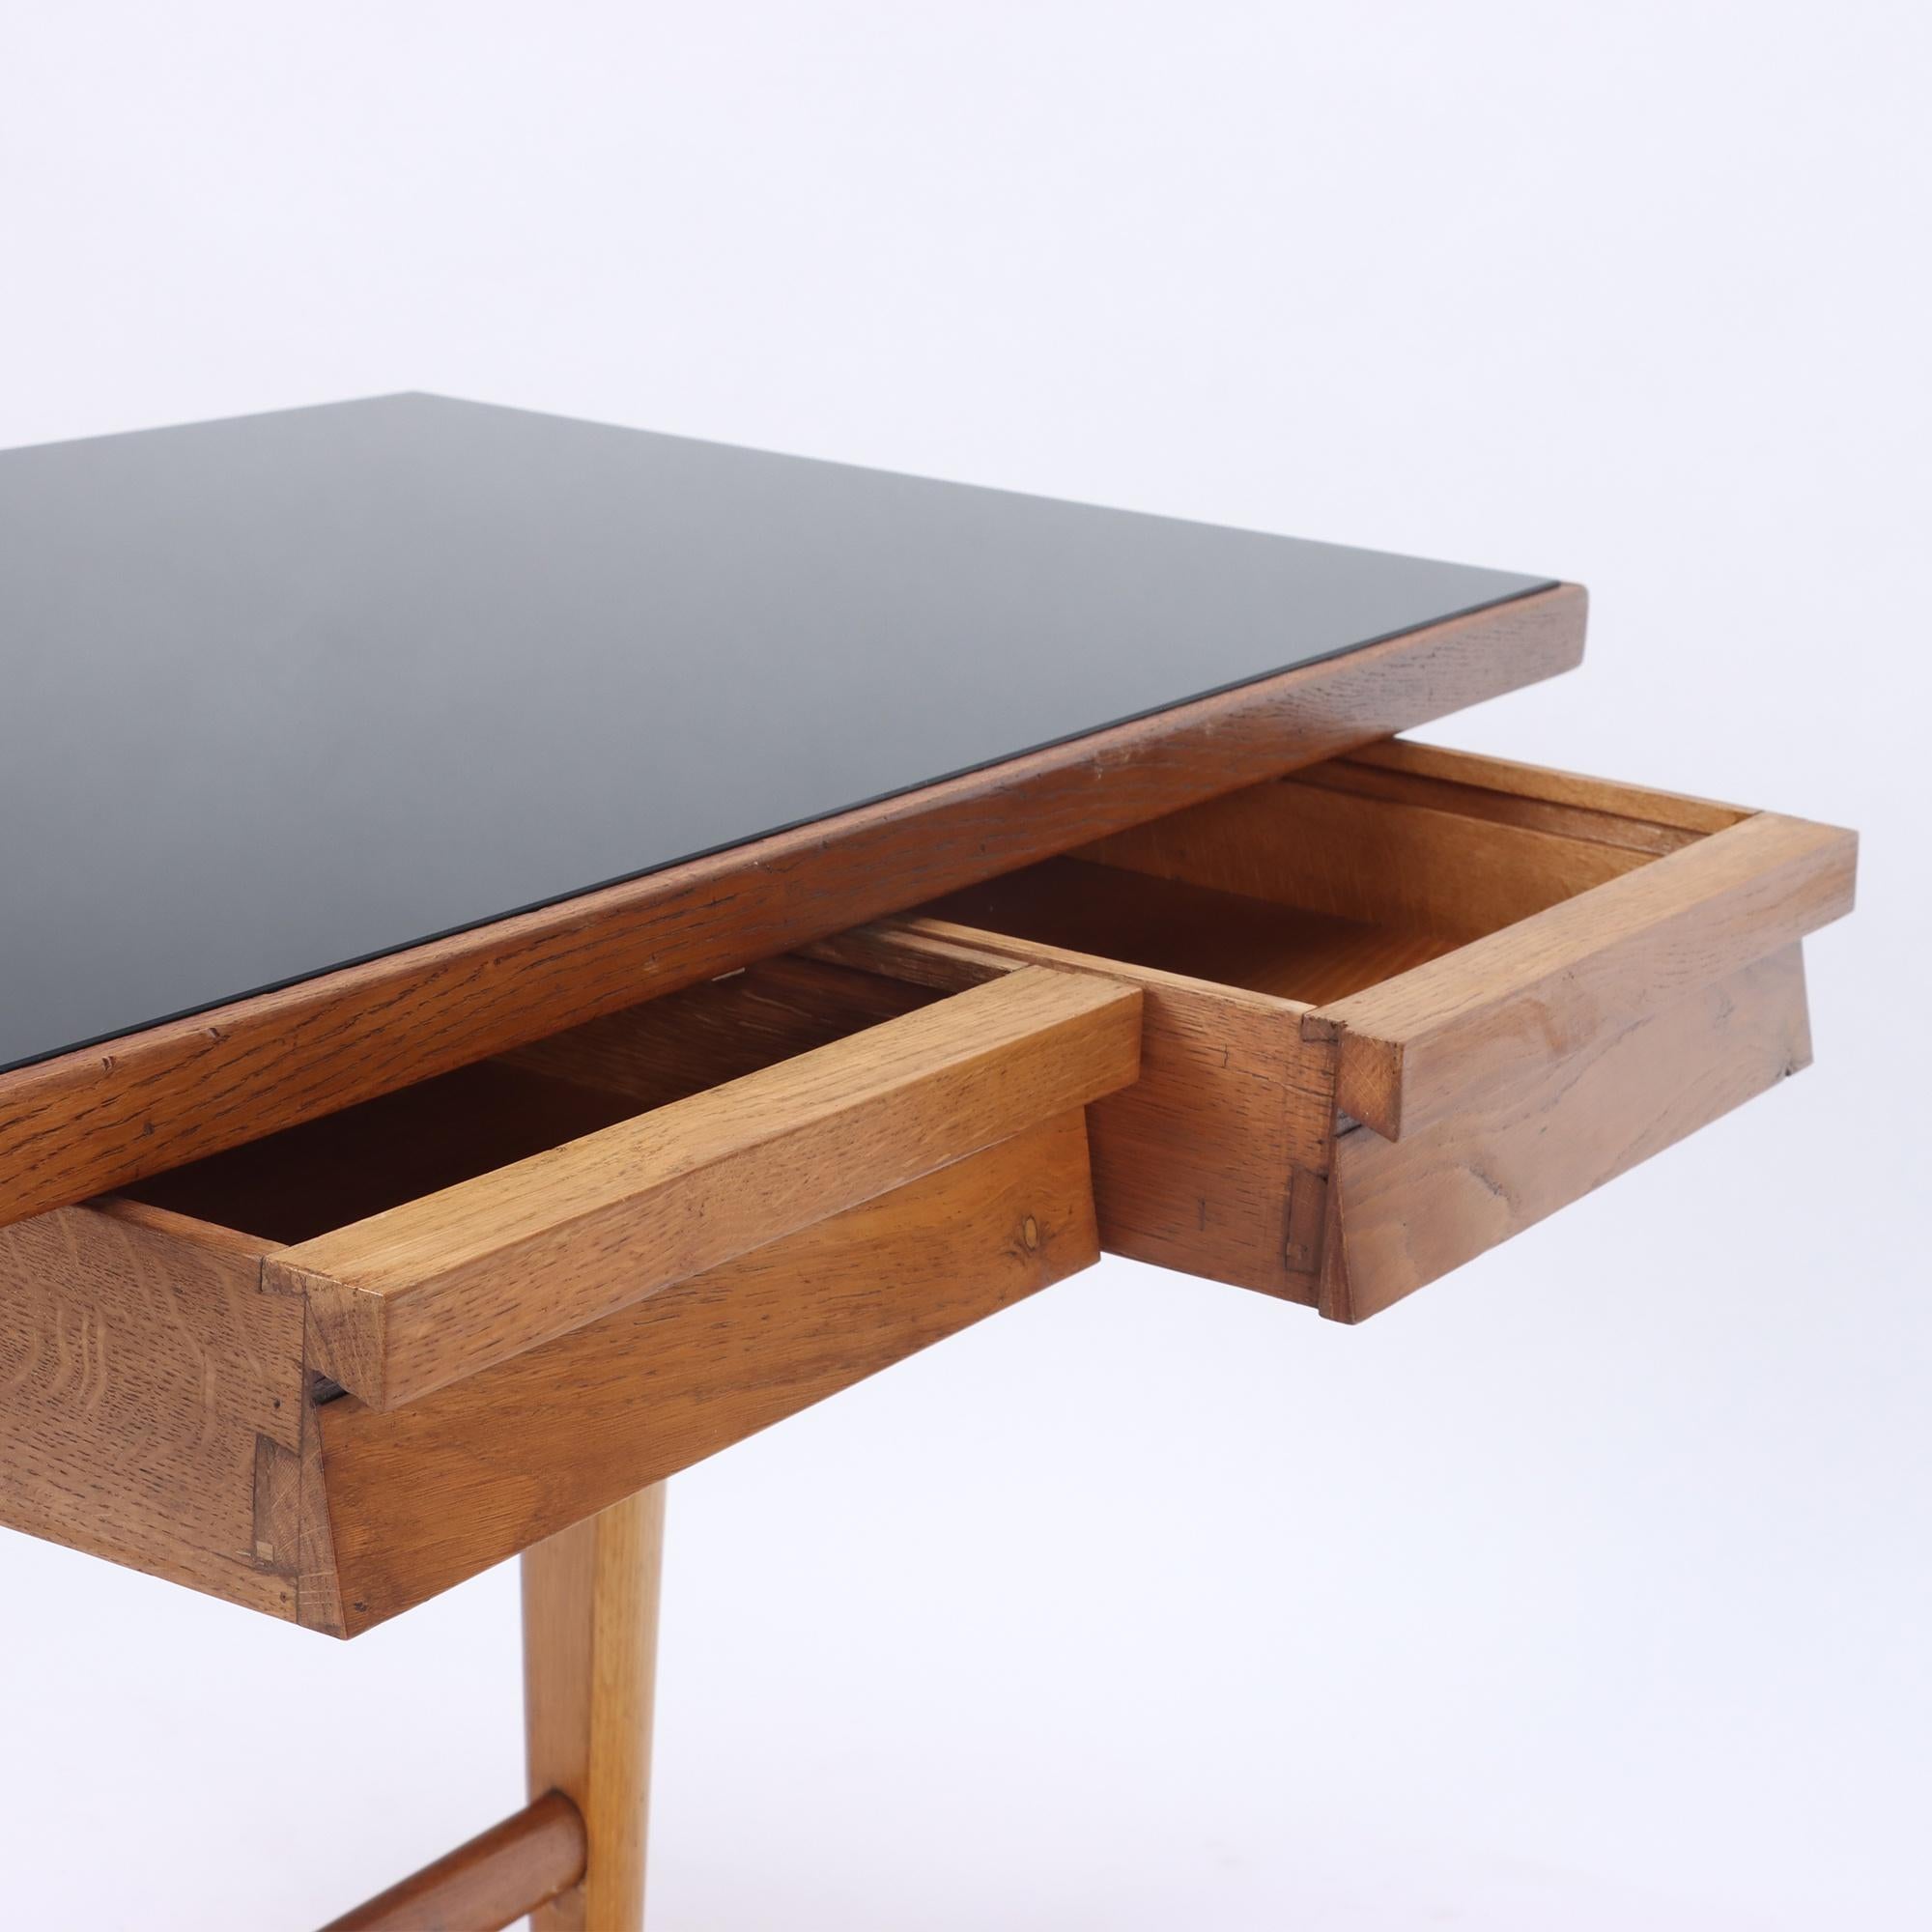 Modern Italian Architect's Oak Table / Desk Made with a Slant, circa 1960 For Sale